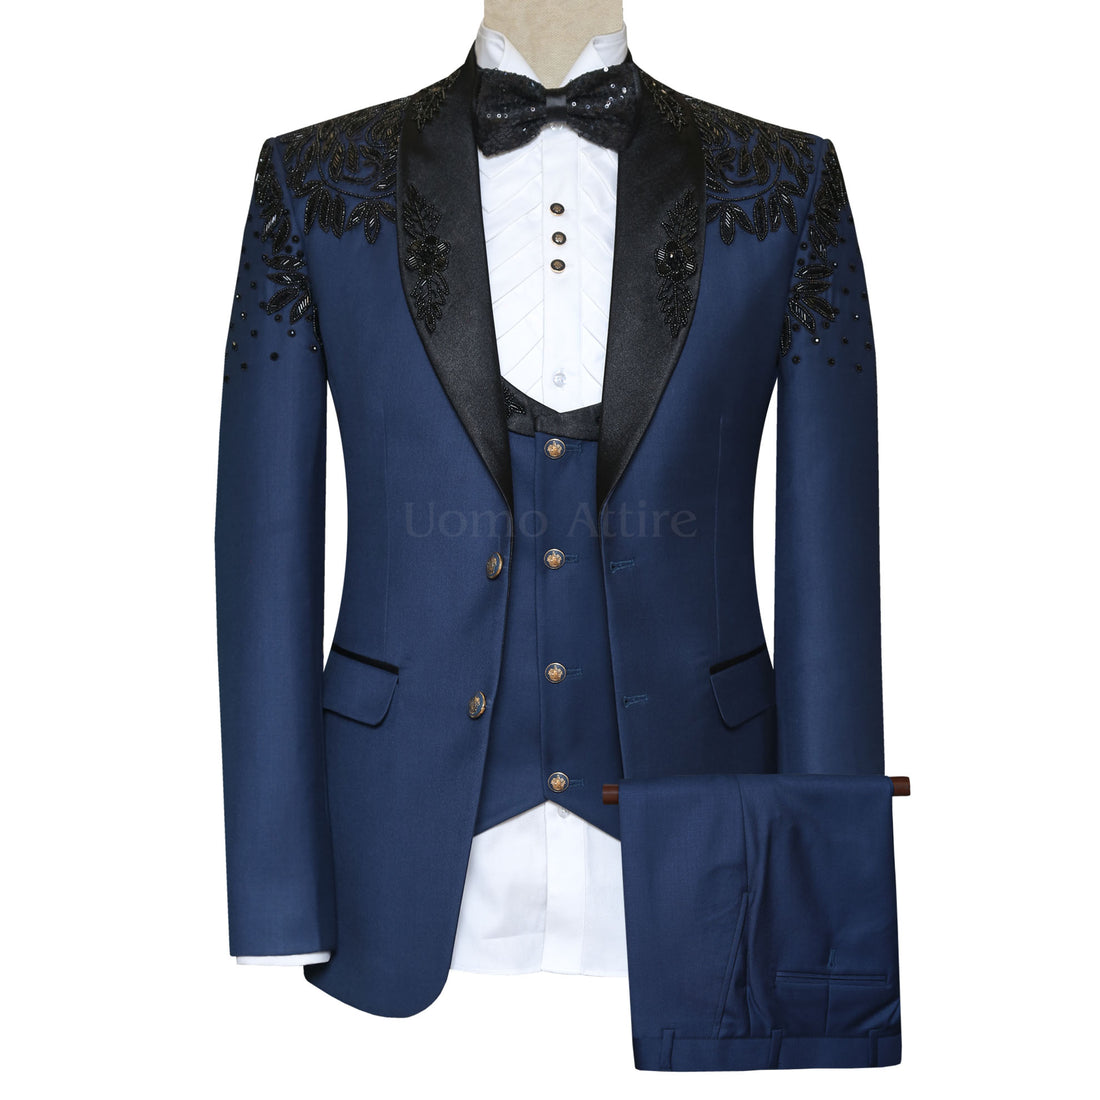 Men's Tuxedo Suits – Smart & Stylish Formal Wear – Uomo Attire